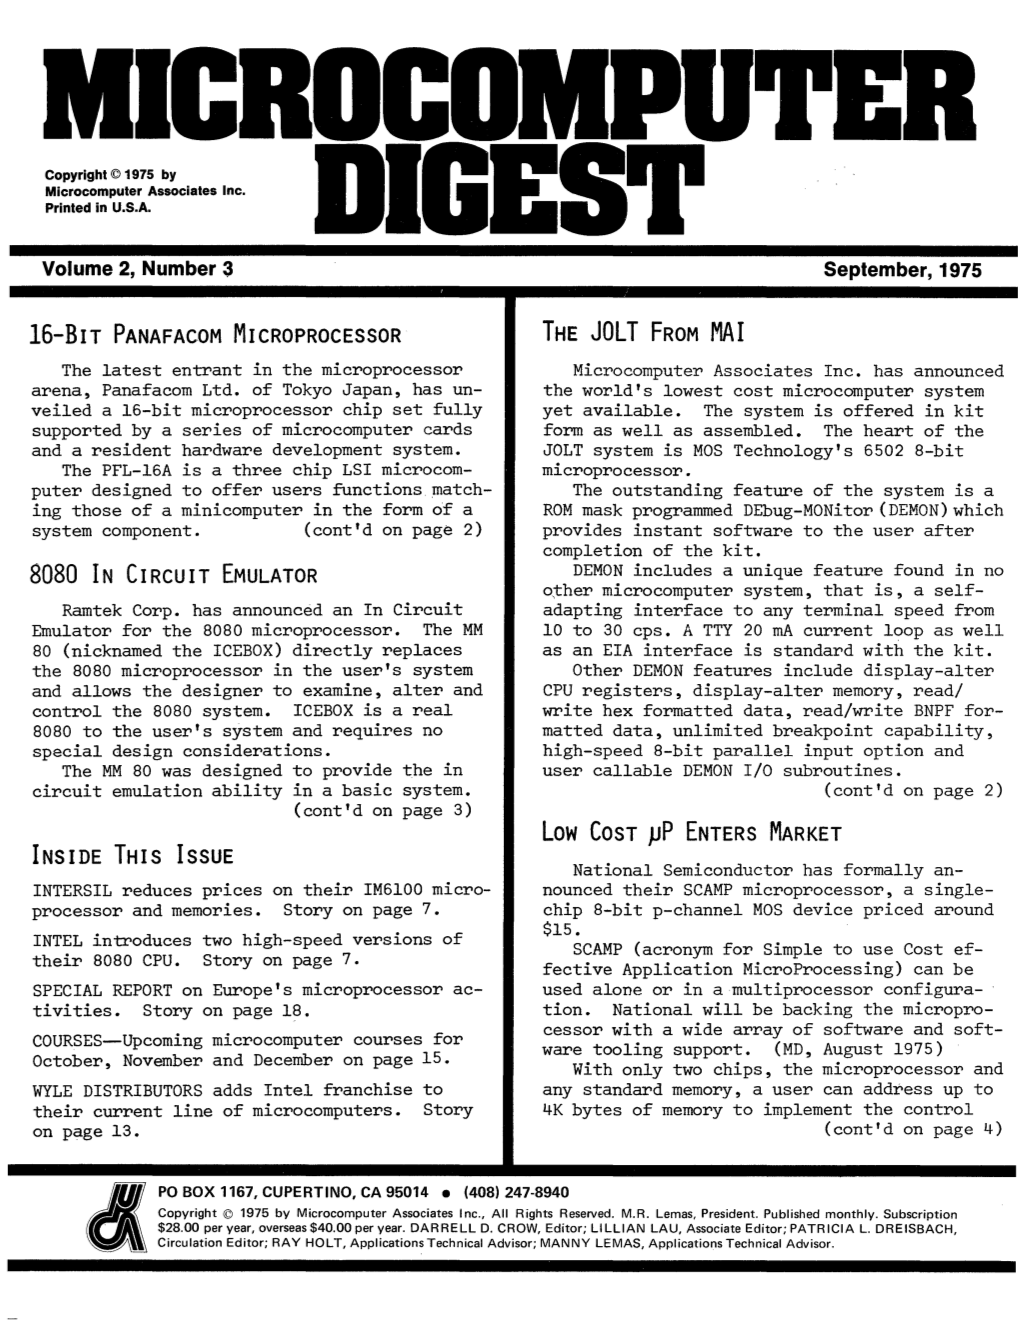 Microcomputer Digest Sept. 1975